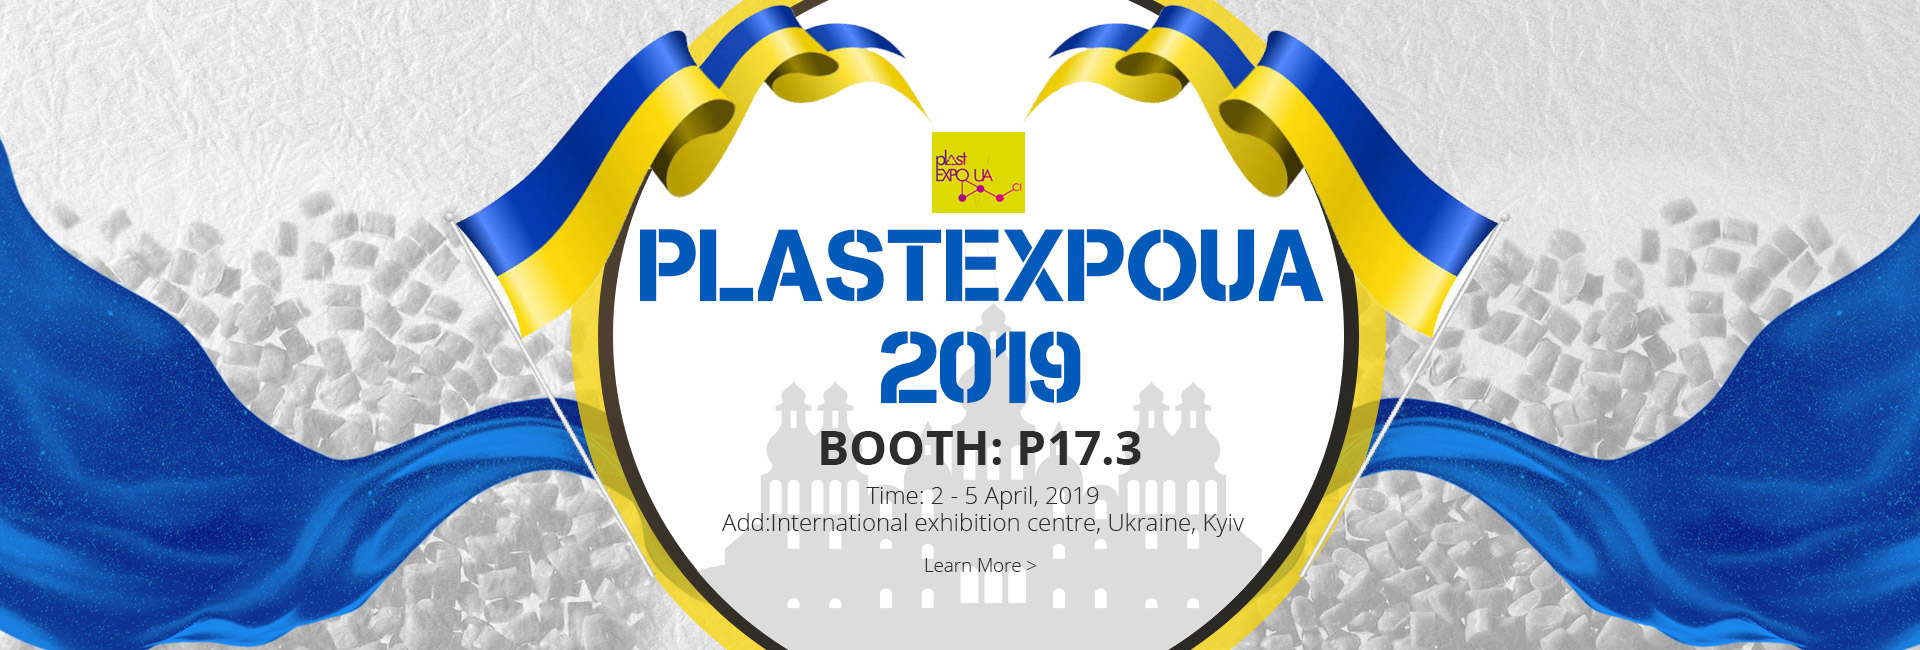 PLASTEXPOUA - 2019